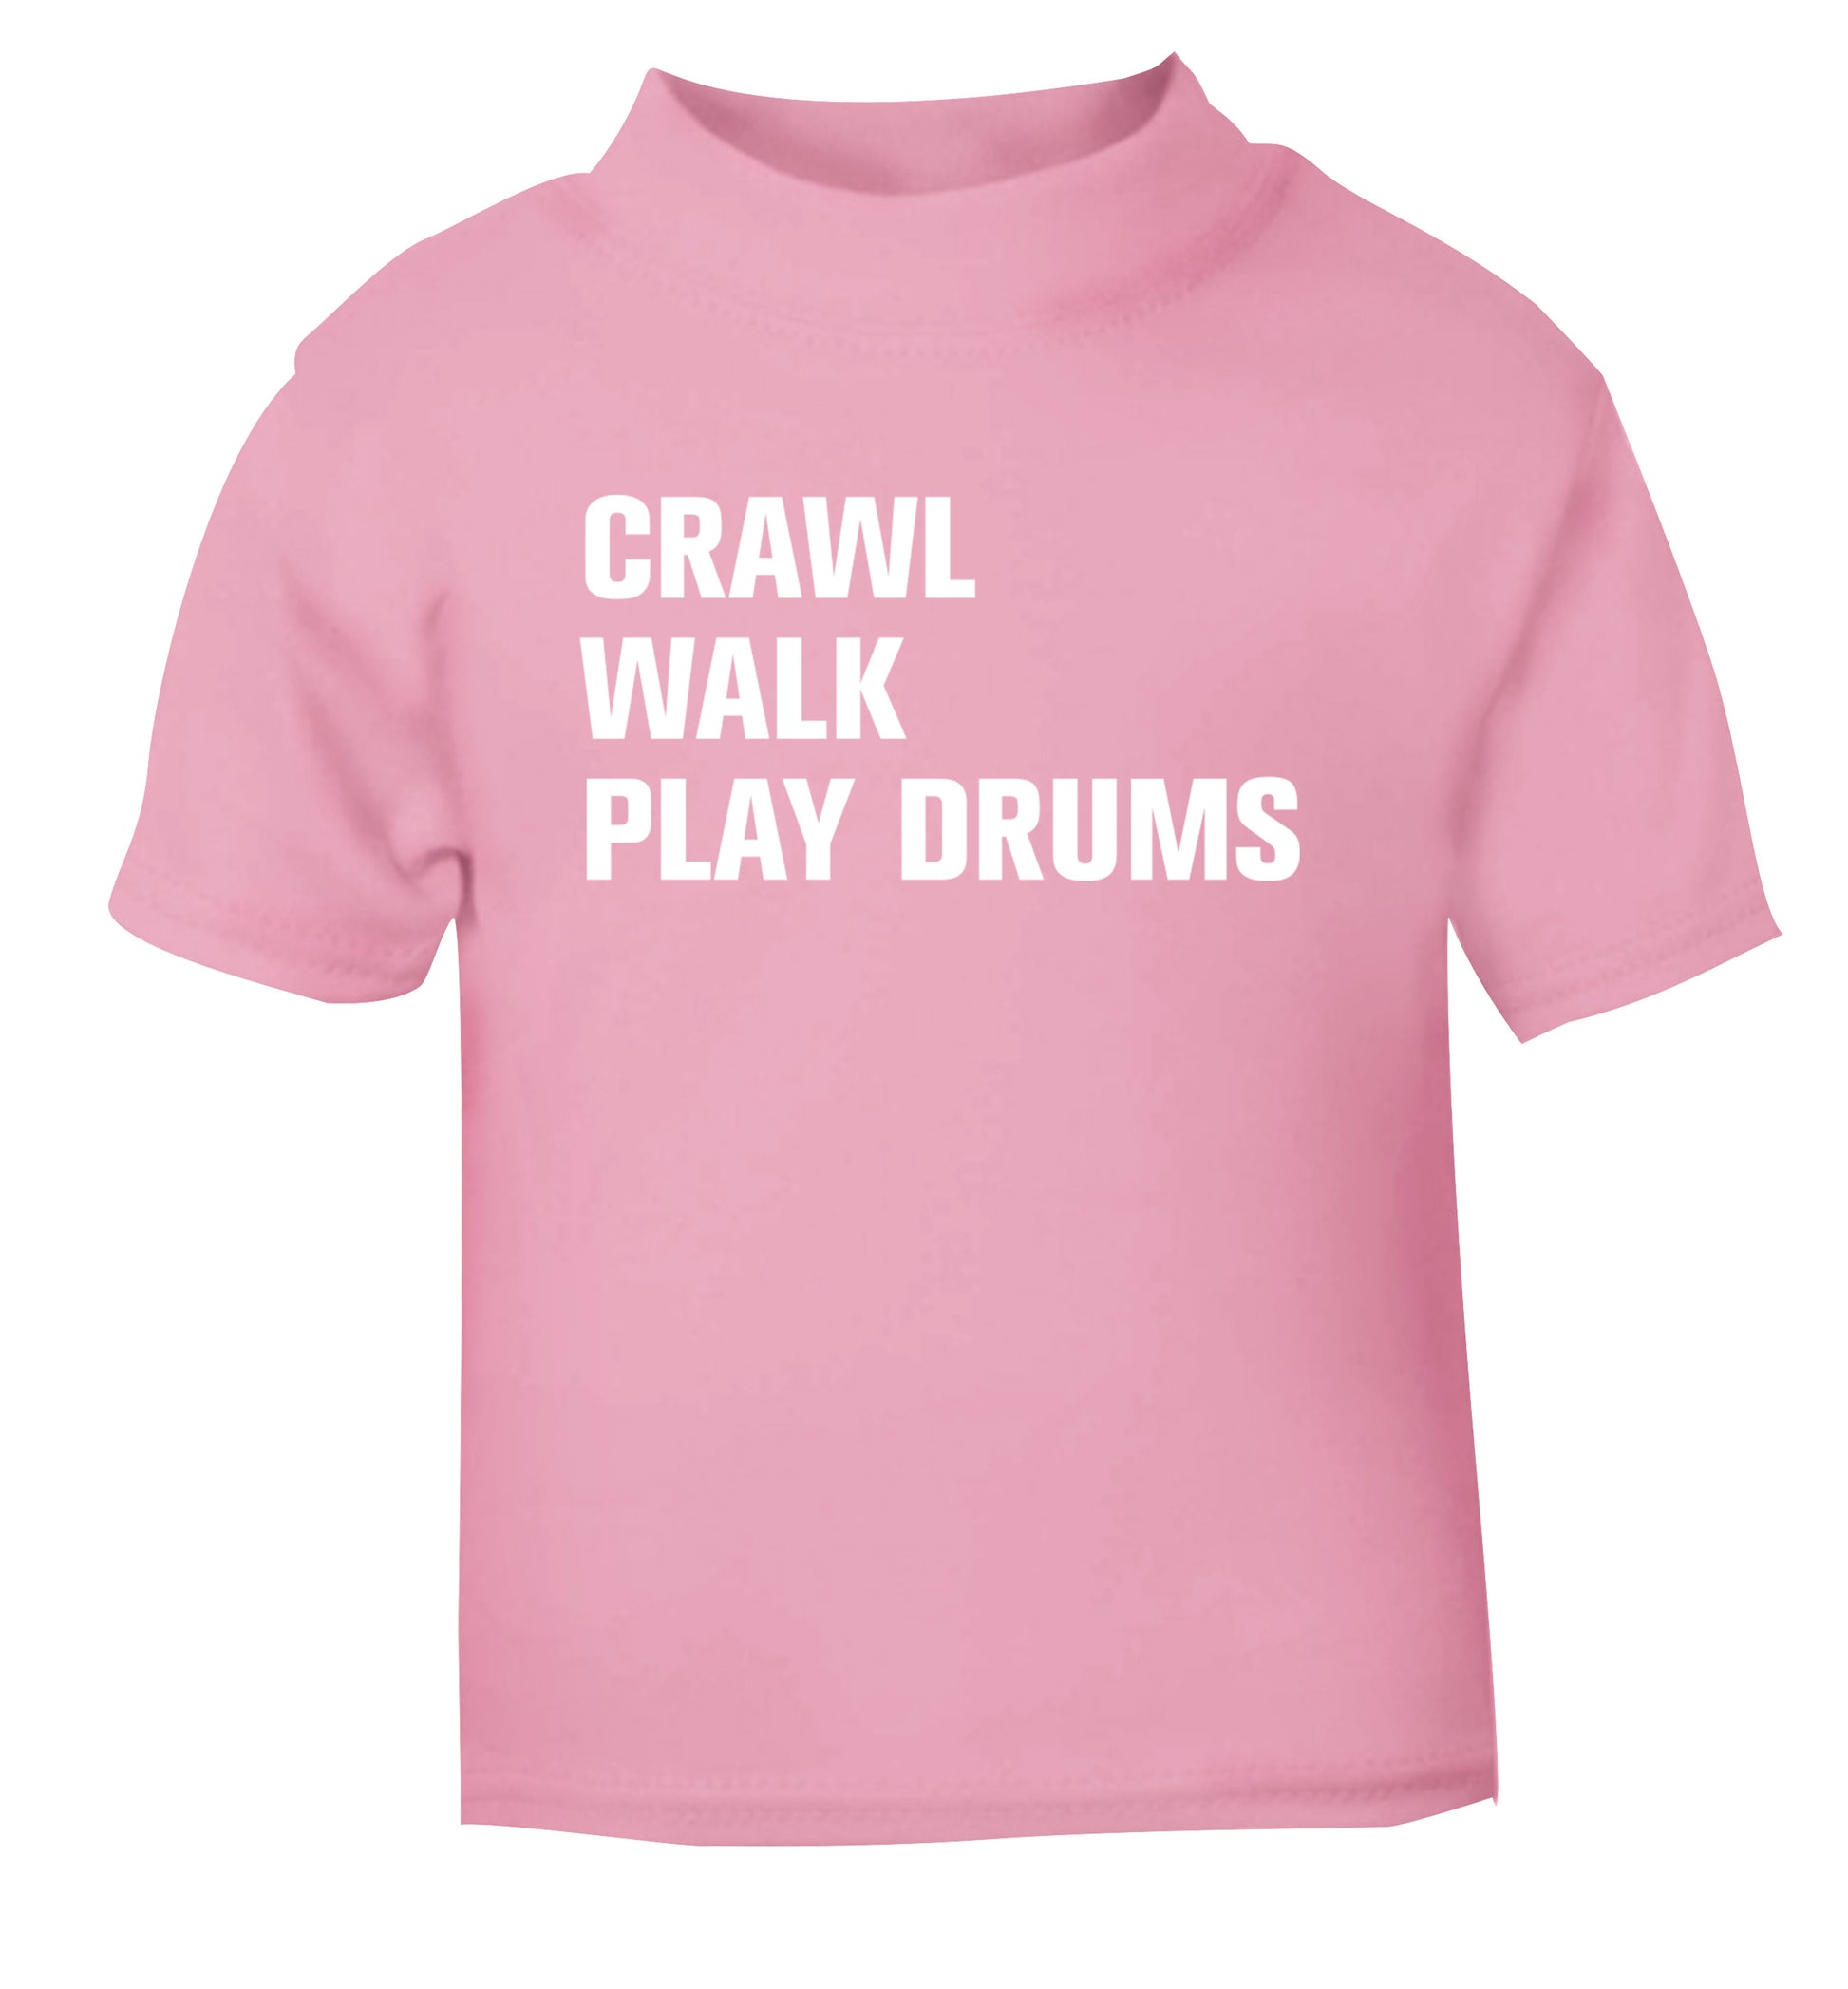 Crawl walk play drums light pink Baby Toddler Tshirt 2 Years